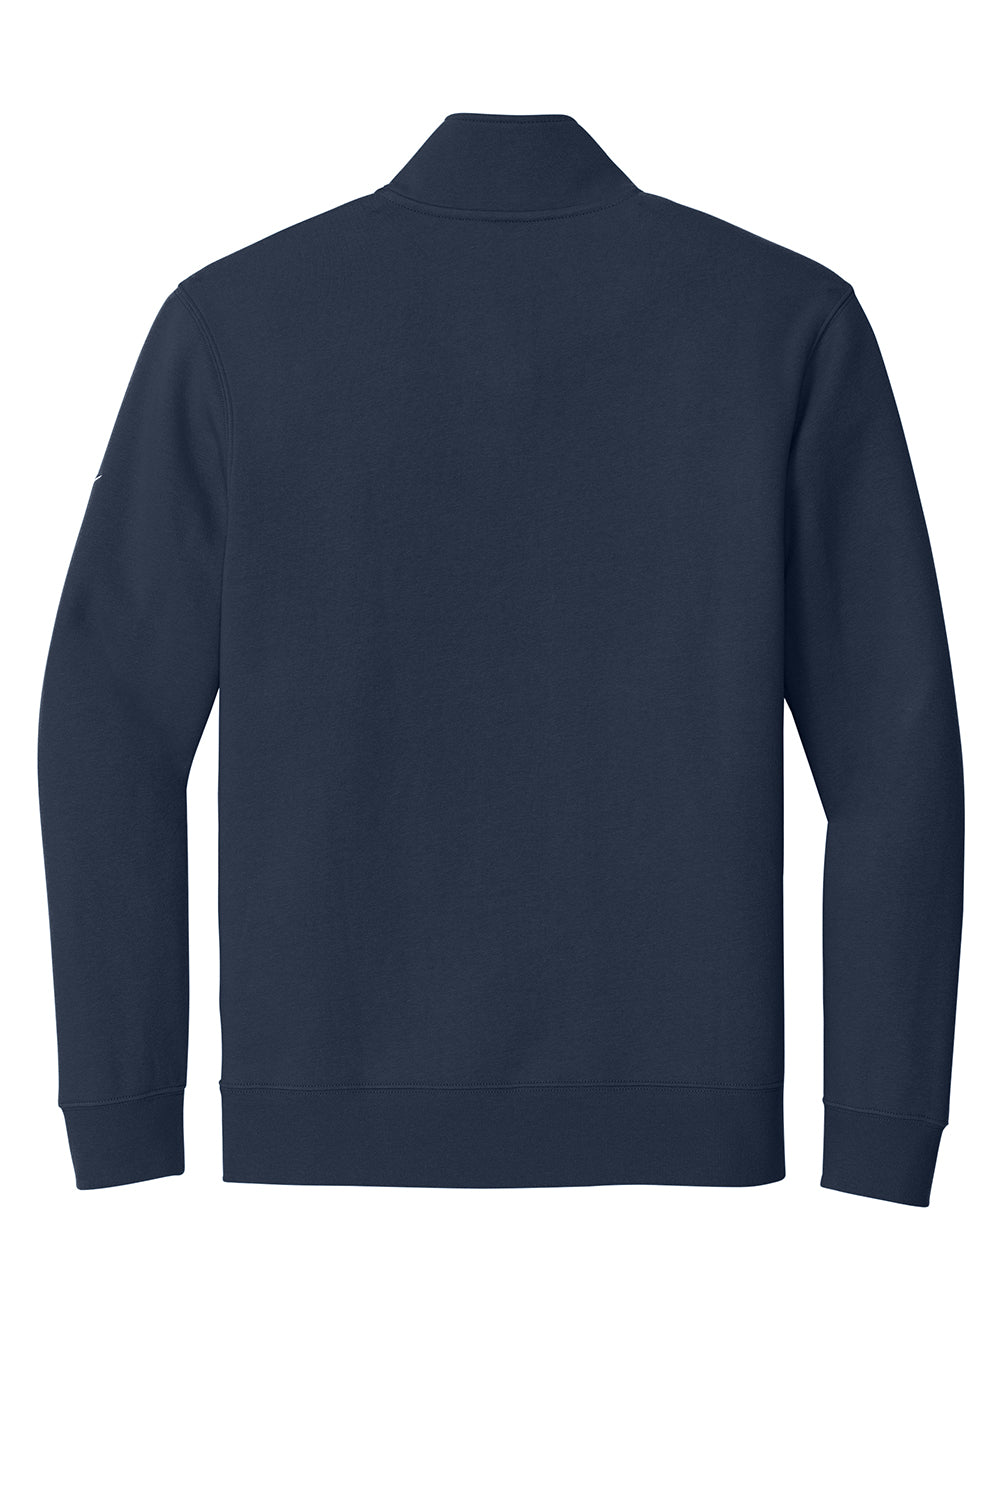 Nike NKDX6718 Mens Club Fleece 1/4 Zip Sweatshirt Midnight Navy Blue Flat Back